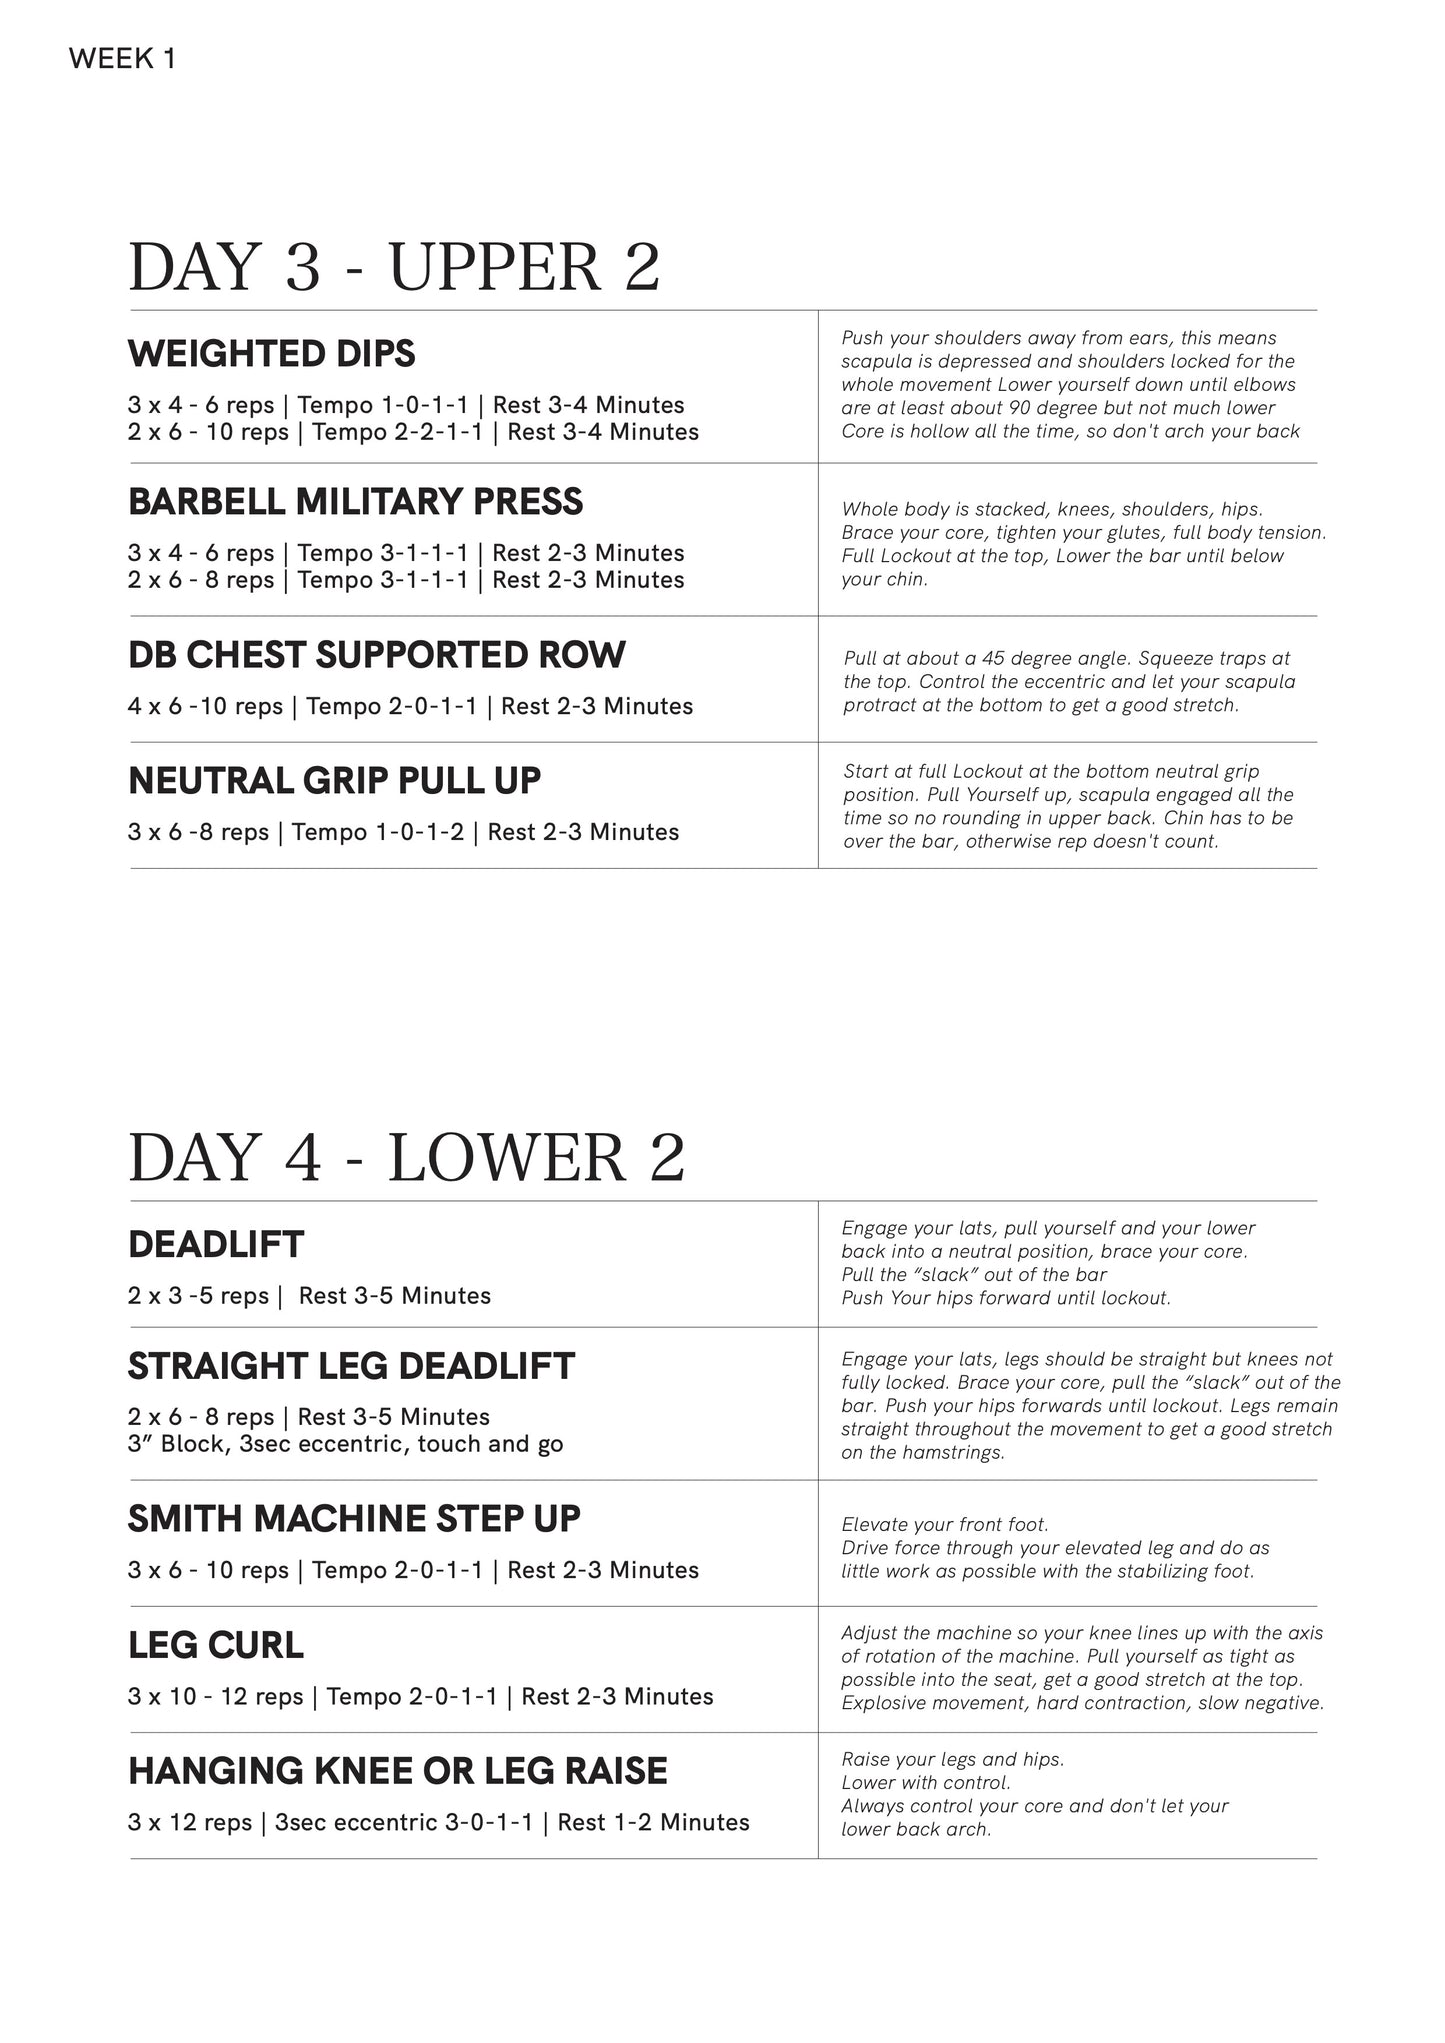 Hybrid Training: Bodybuilding x Calisthenics | 12 Week Program